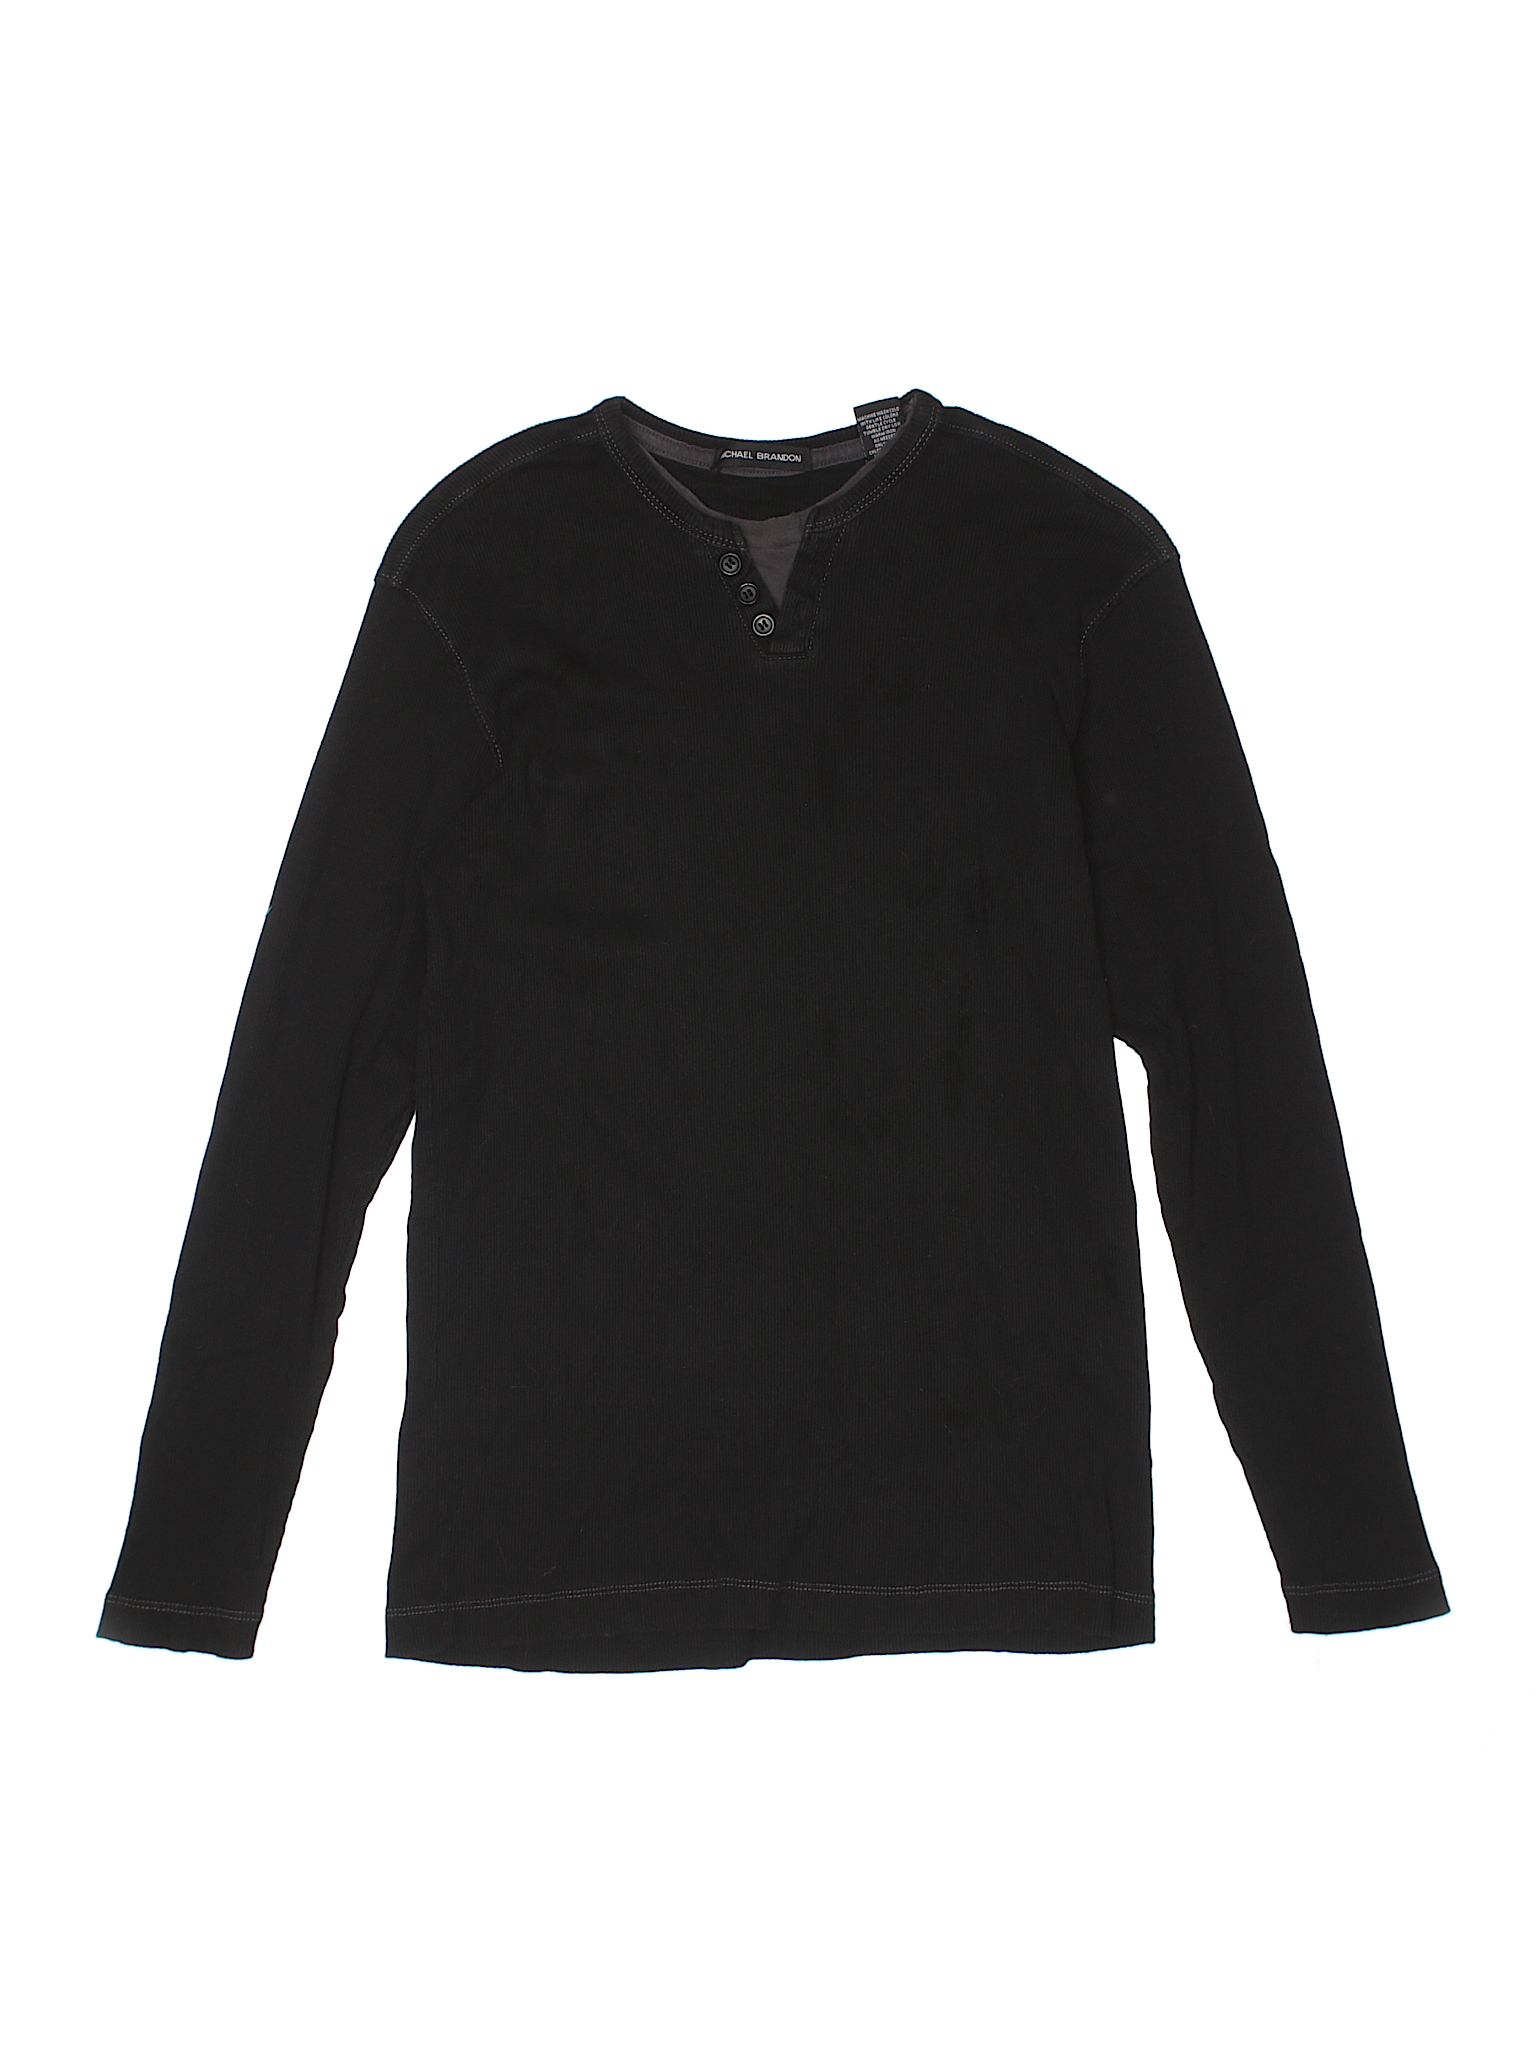 Michael Brandon 100% Cotton Solid Black Long Sleeve Henley Size S